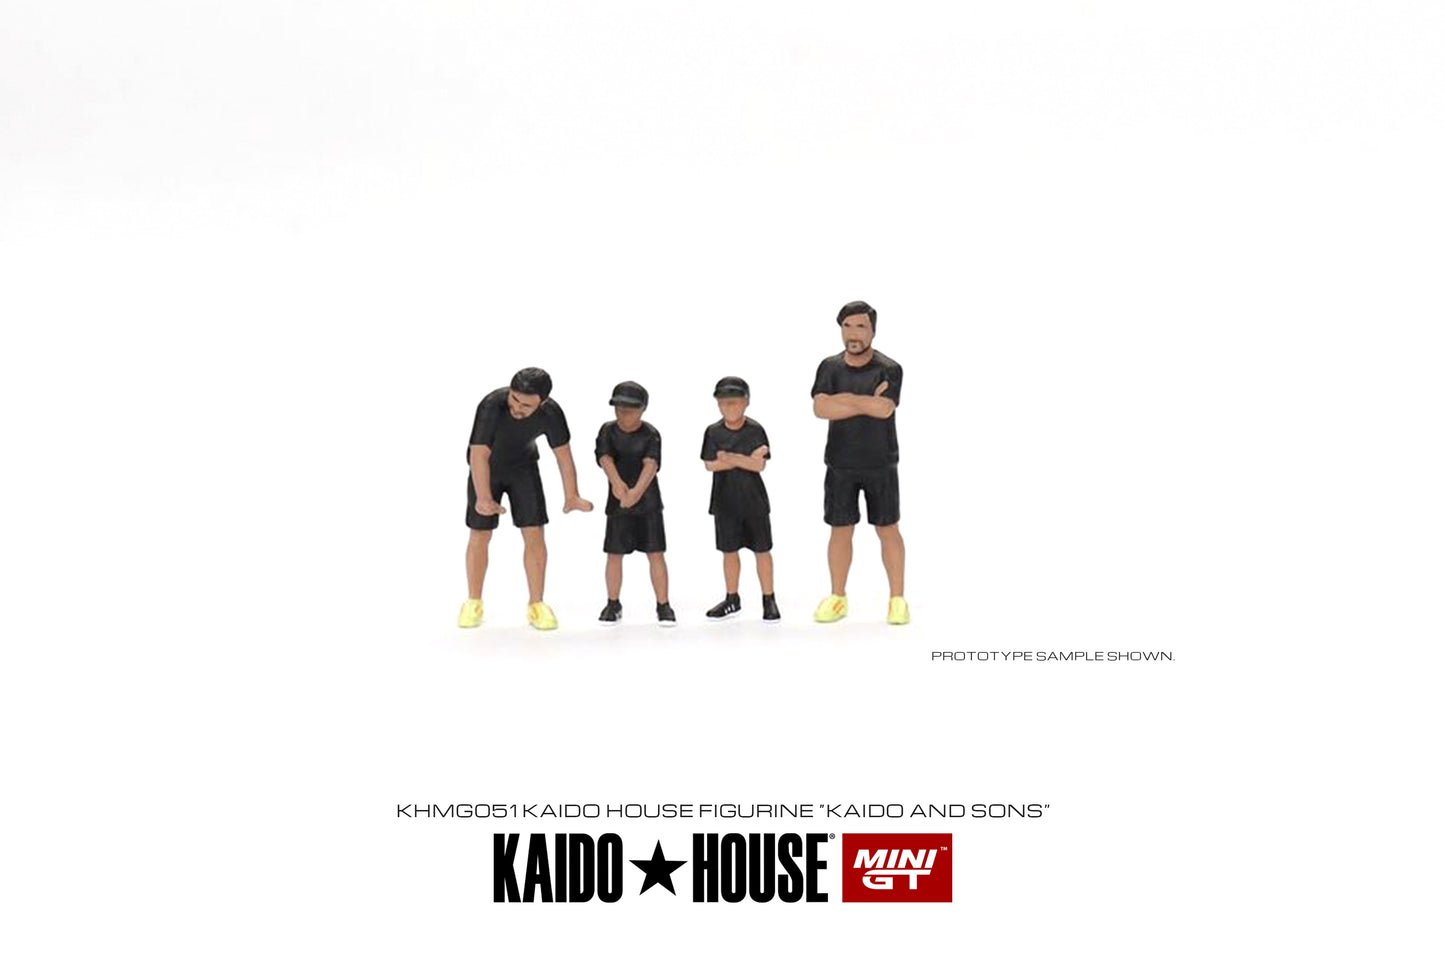 MiniGT - Kaido House Figurines: Kaido & Sons